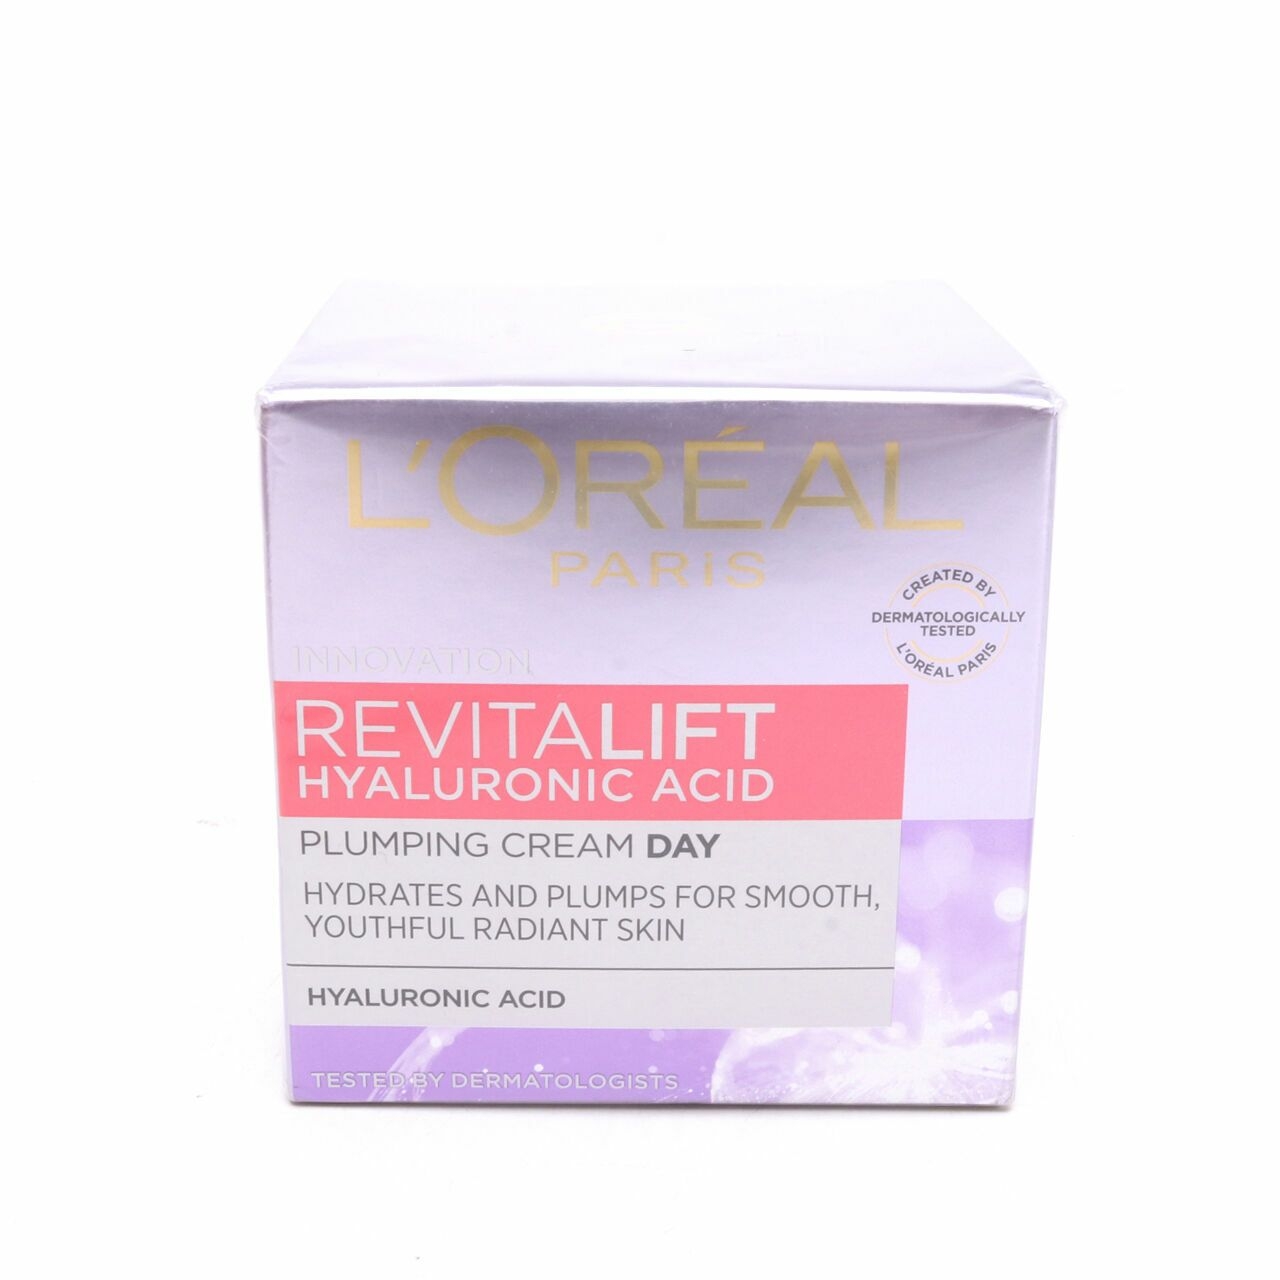 L'Oreal Revitafit Hyaluronic Acid Pluming Cream Day